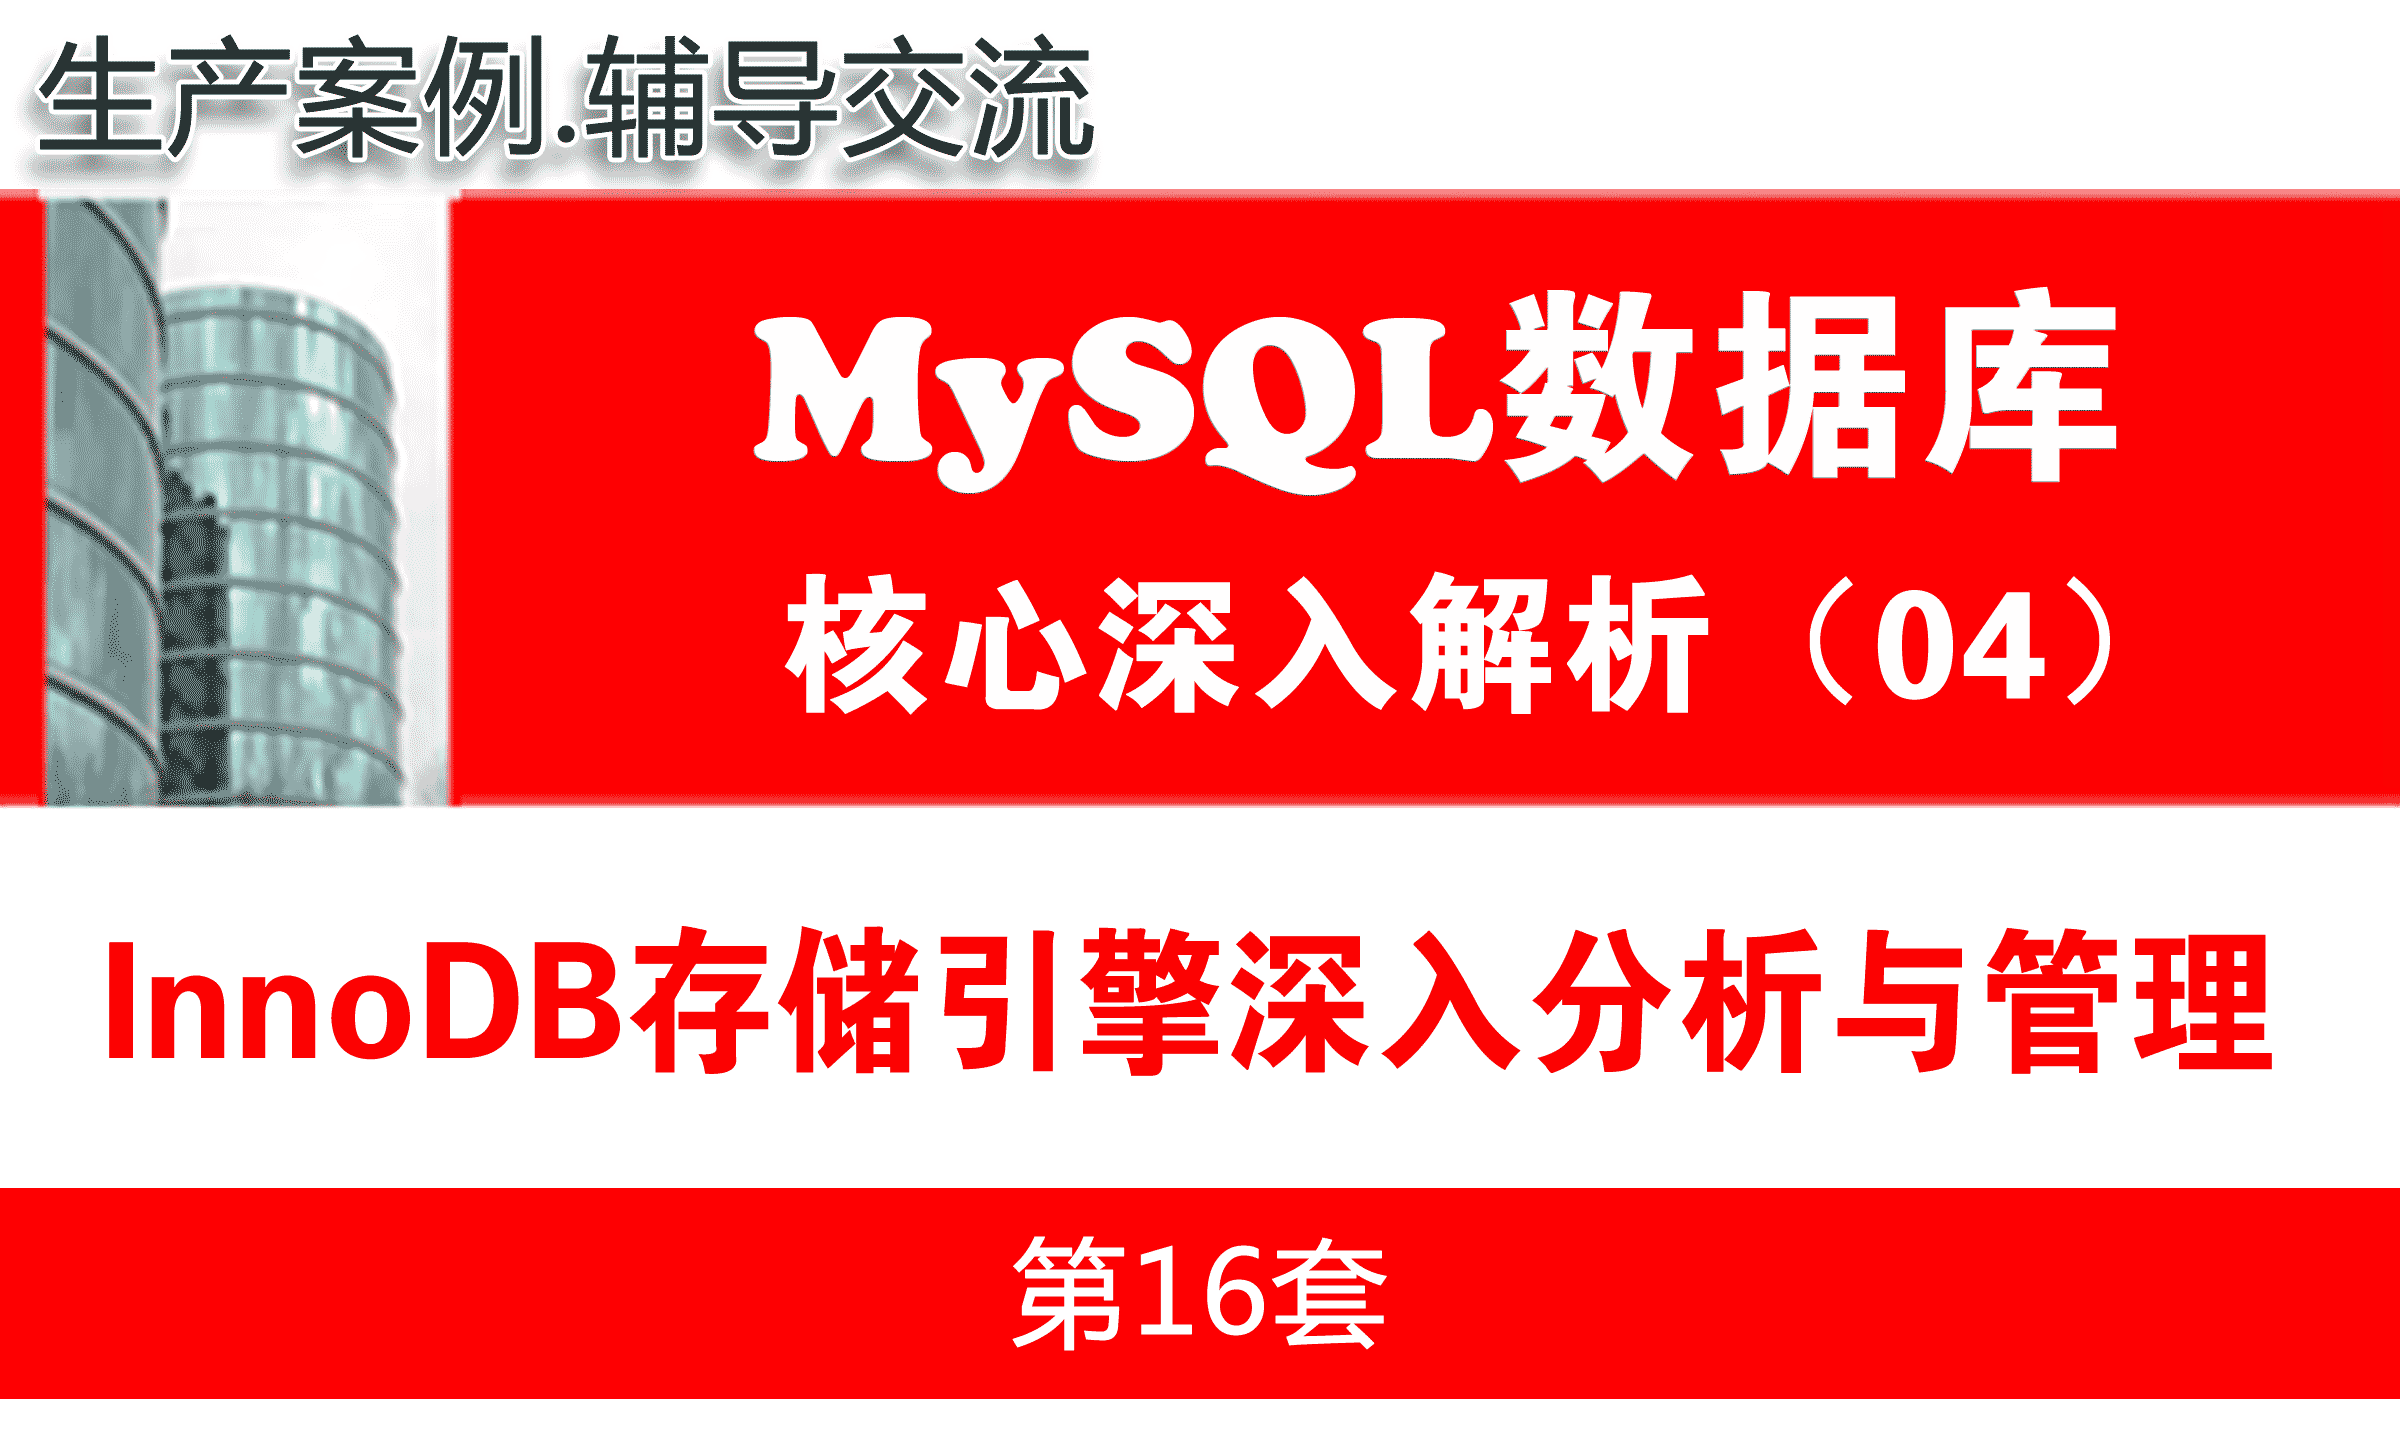  MySQL InnoDB storage engine in-depth analysis and management _MySQL database basic in-depth and core analysis 04